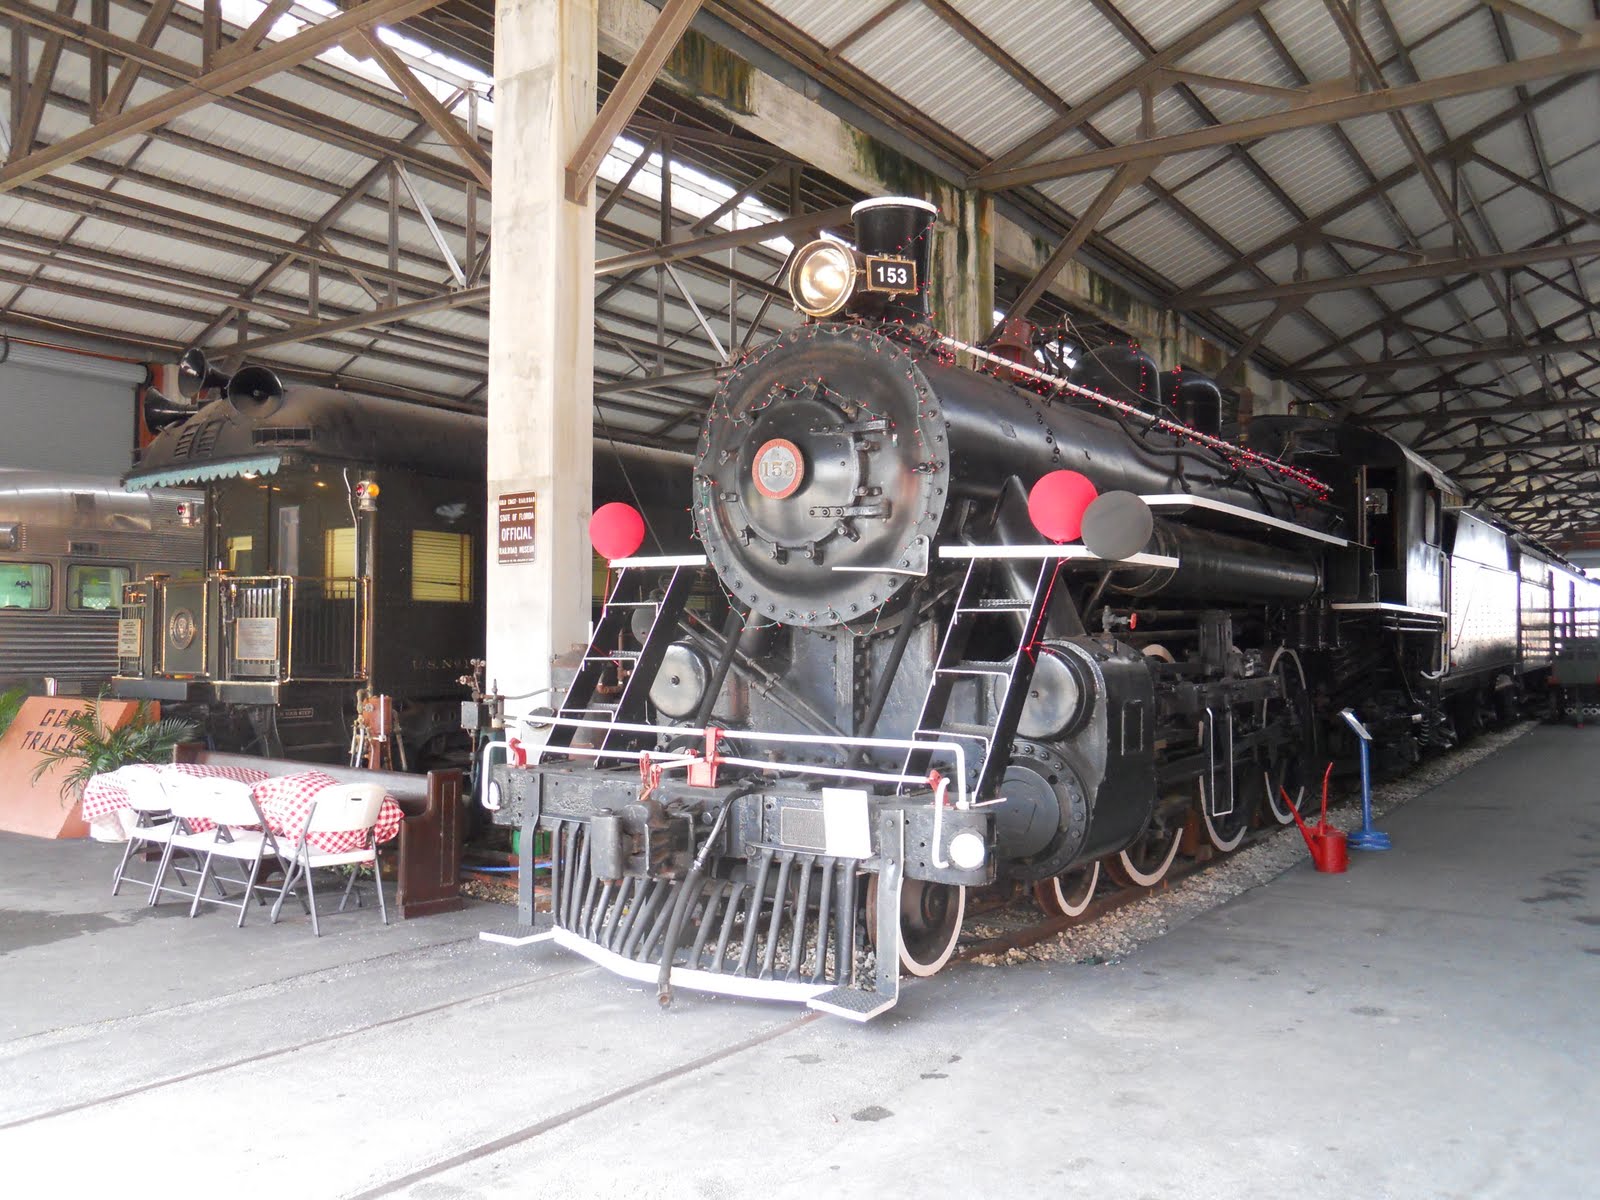 Hicks Car Works: Trip Report - Gold Coast Railroad Museum - Miami, Florida